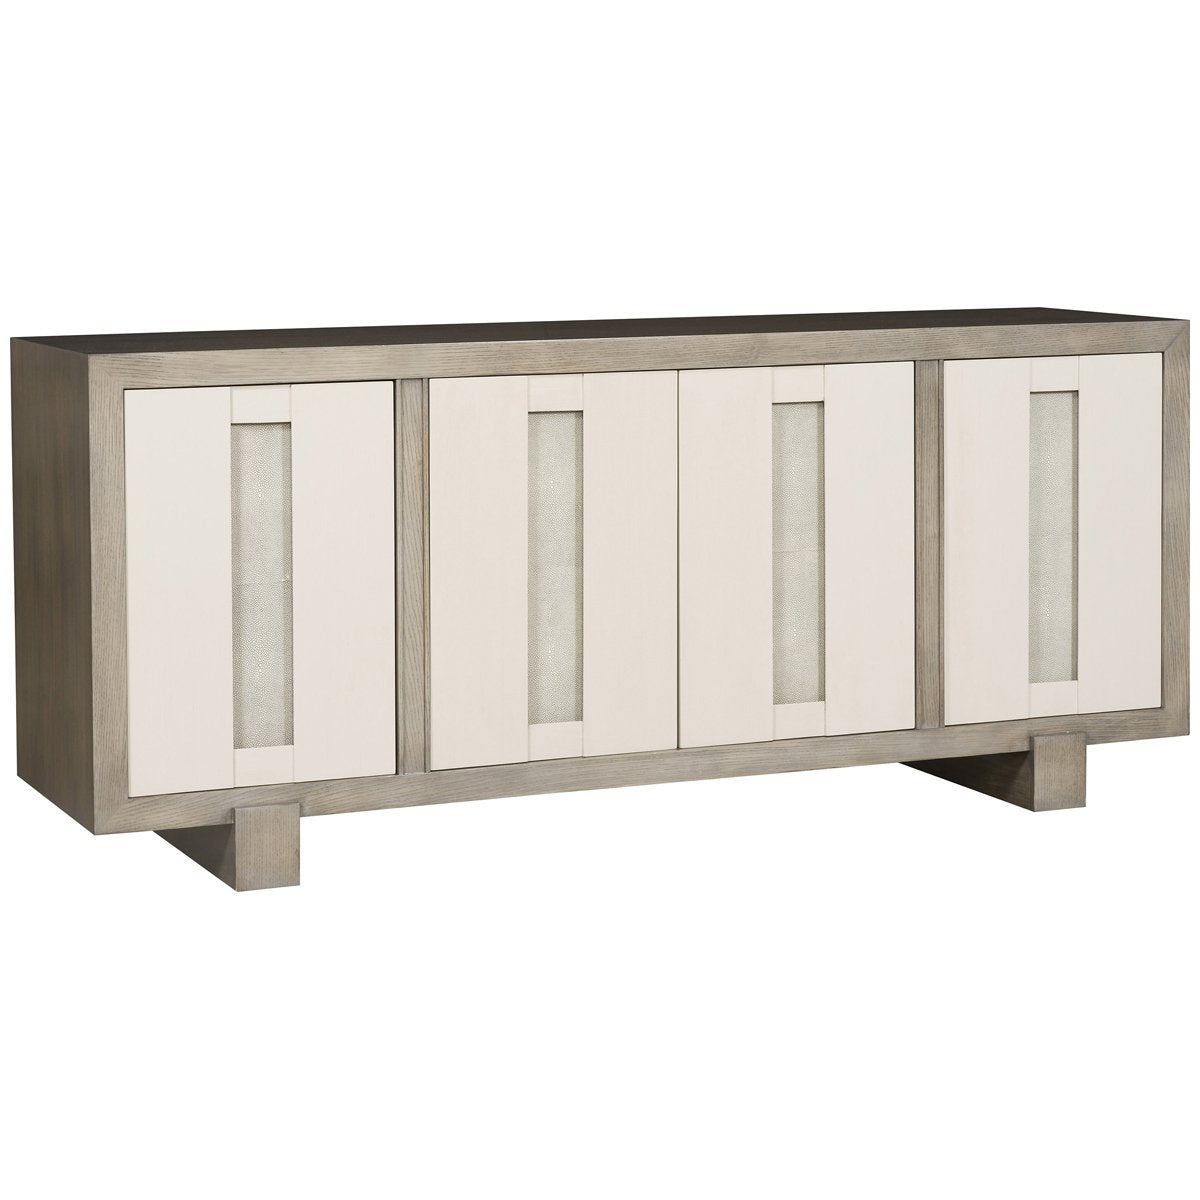 Vanguard Furniture Kentfield Storage Cabinet